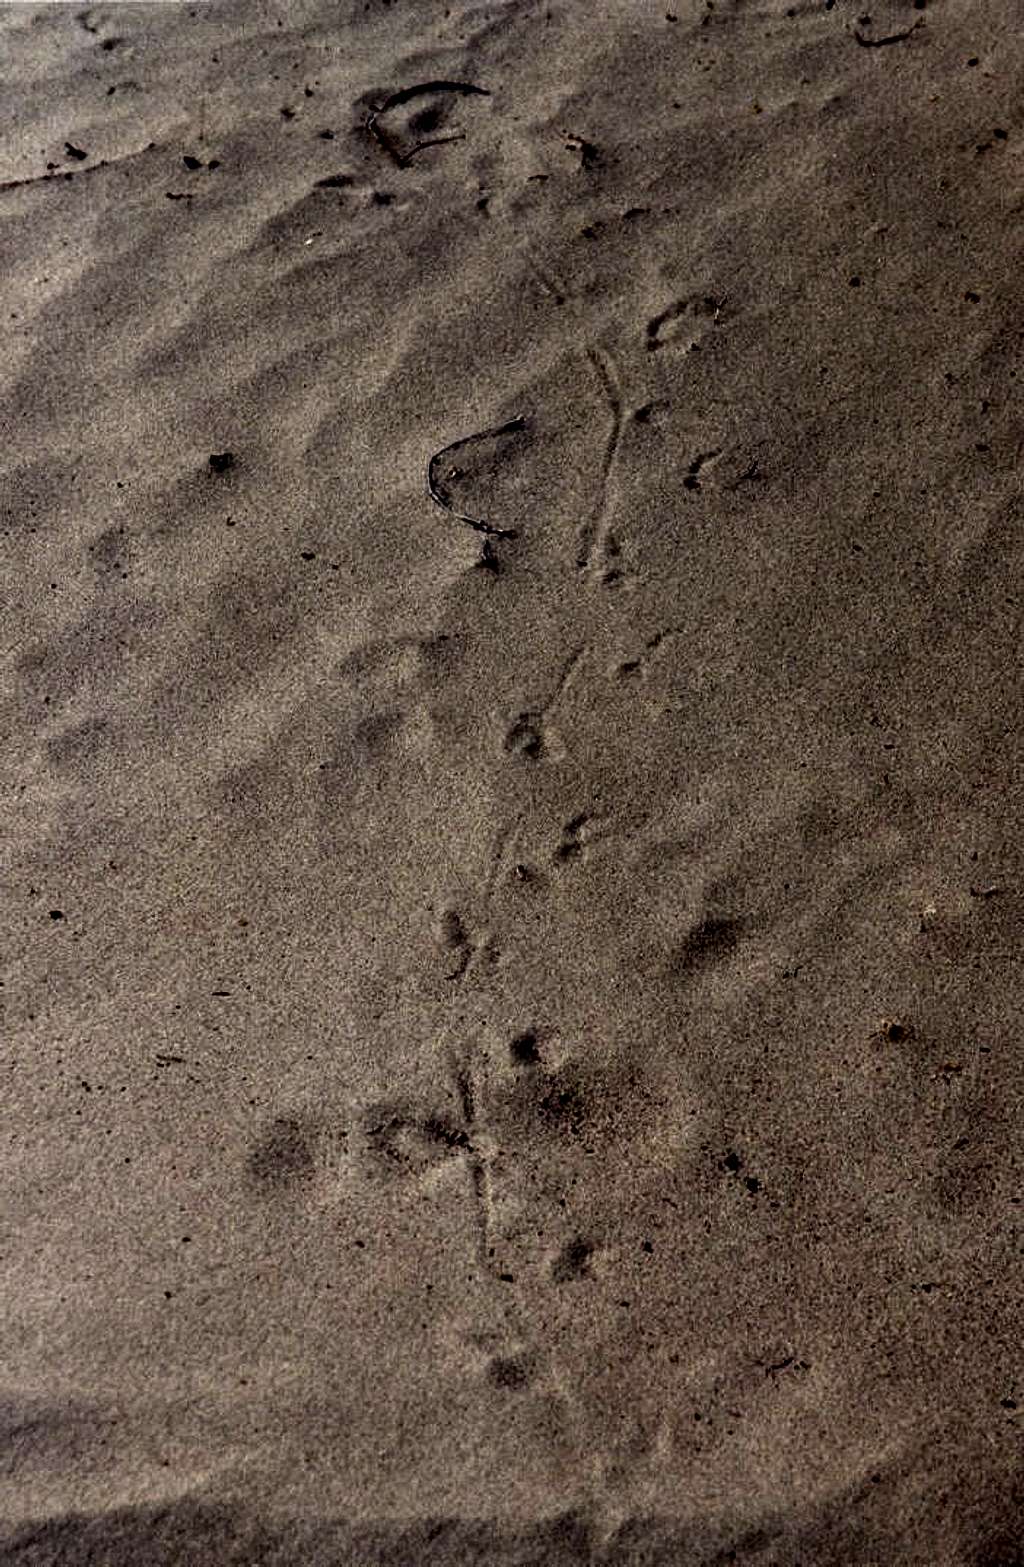 Lizard Trail in the Sand